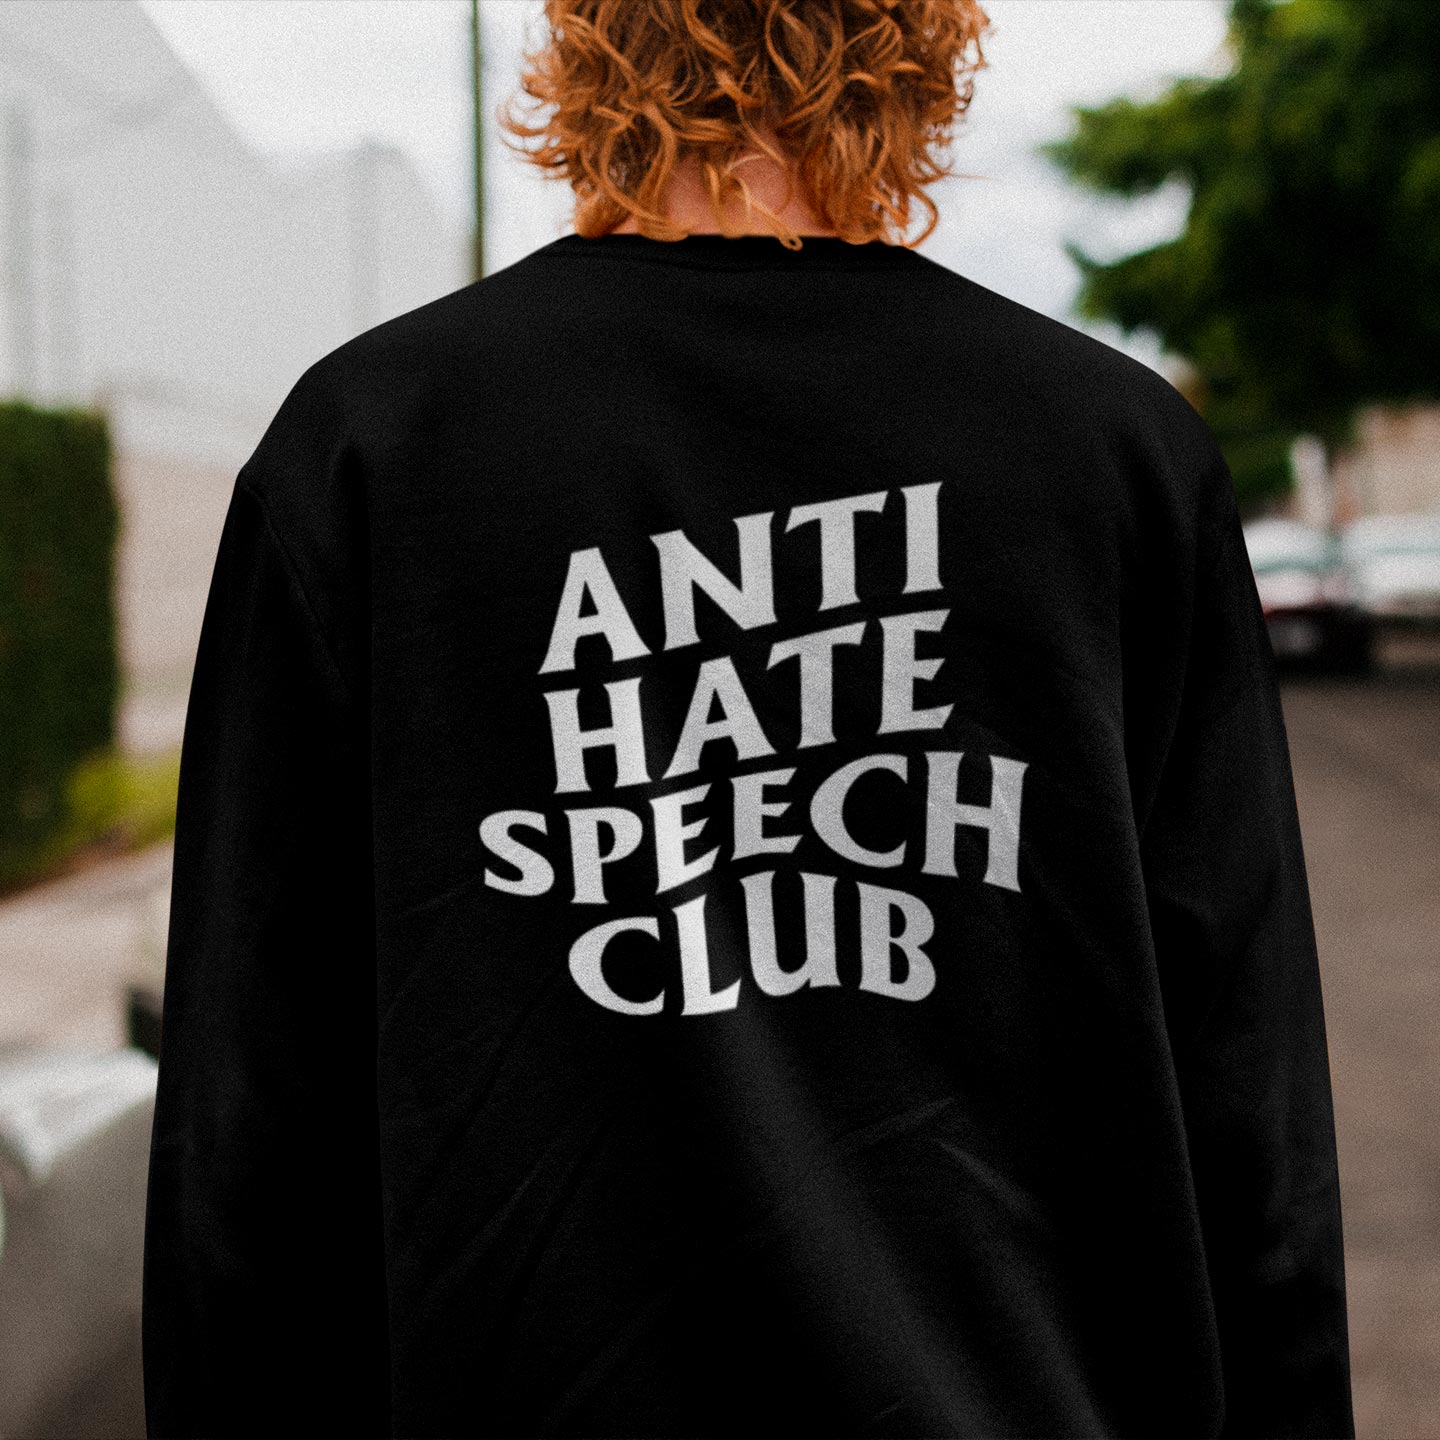 ANTI HATE SPEECH CLUB - SWEATER - HERR GANZE